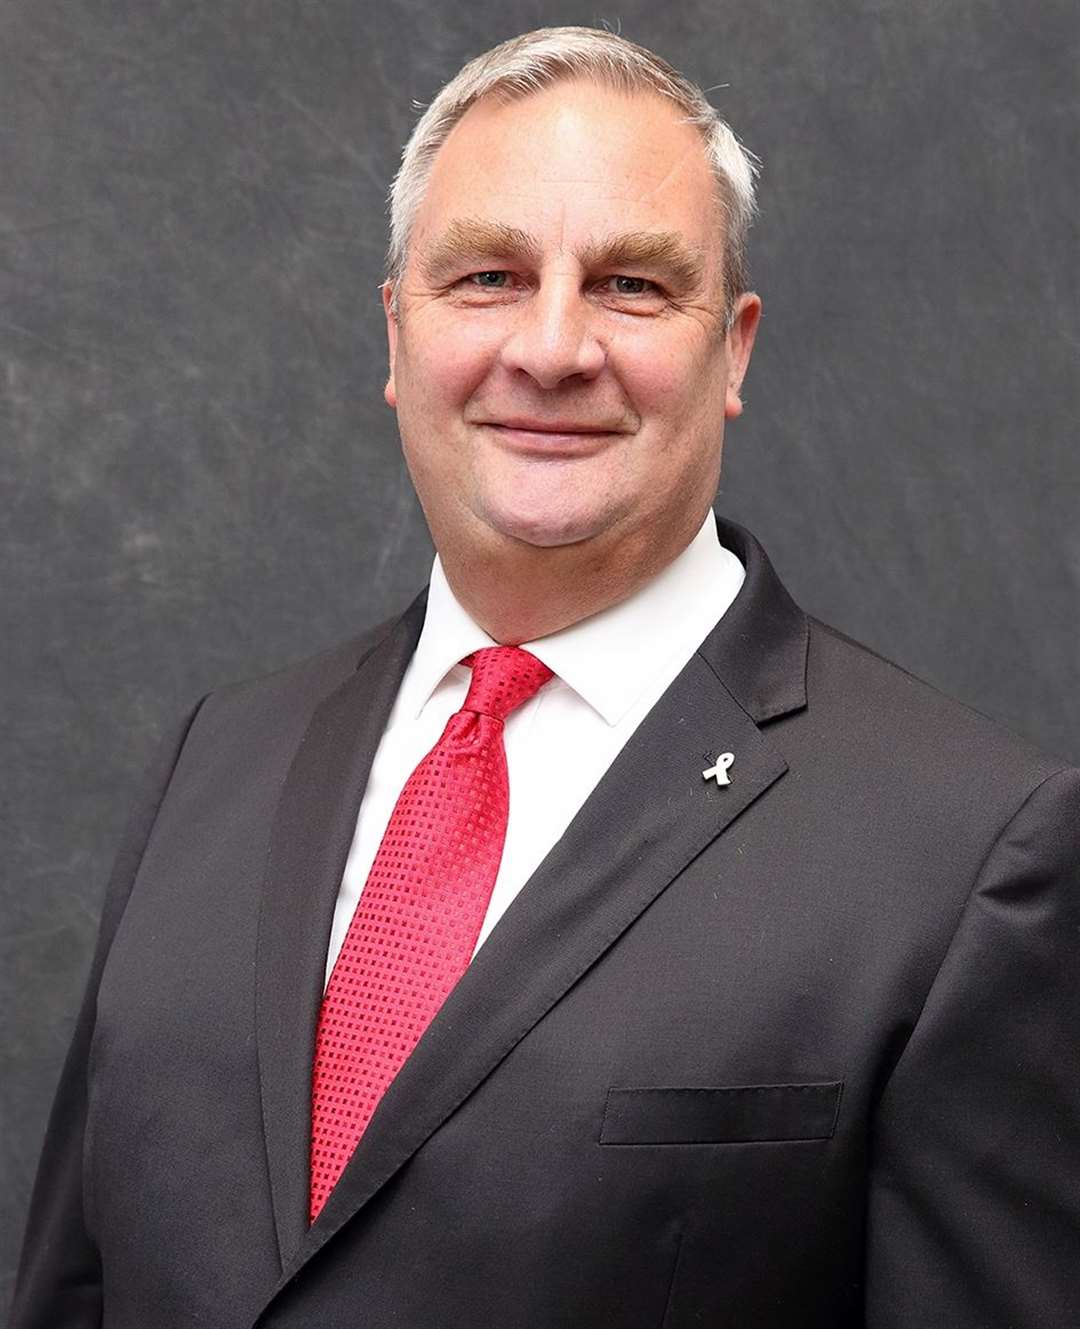 Cllr John Burden, leader of Gravesham council